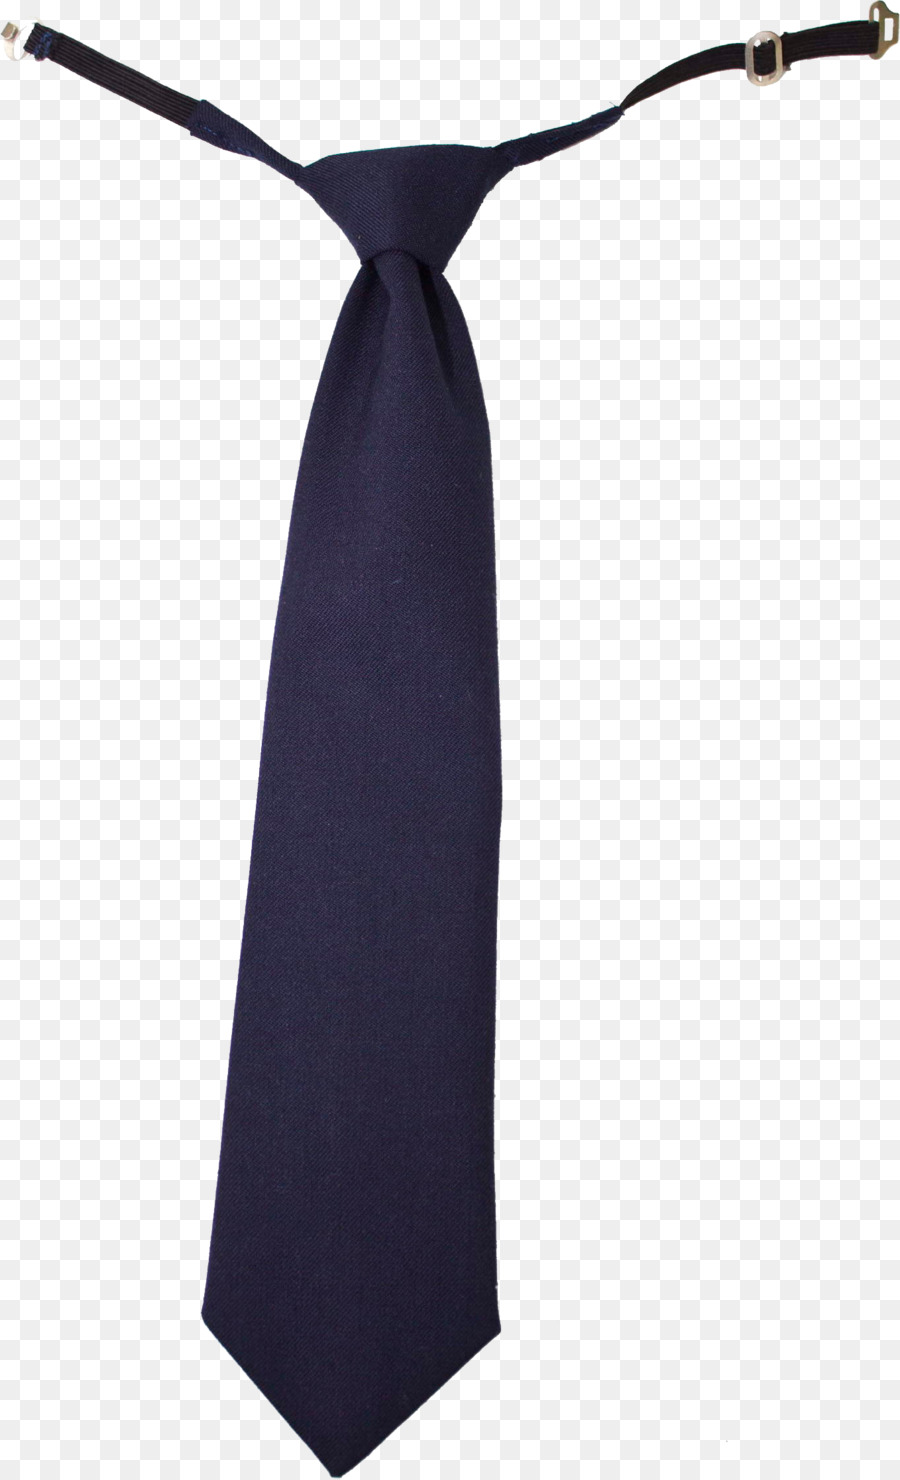 Necktie Bow tie Clothing Accessories - bow tie png download - 1358*2231 - Free Transparent Necktie png Download.